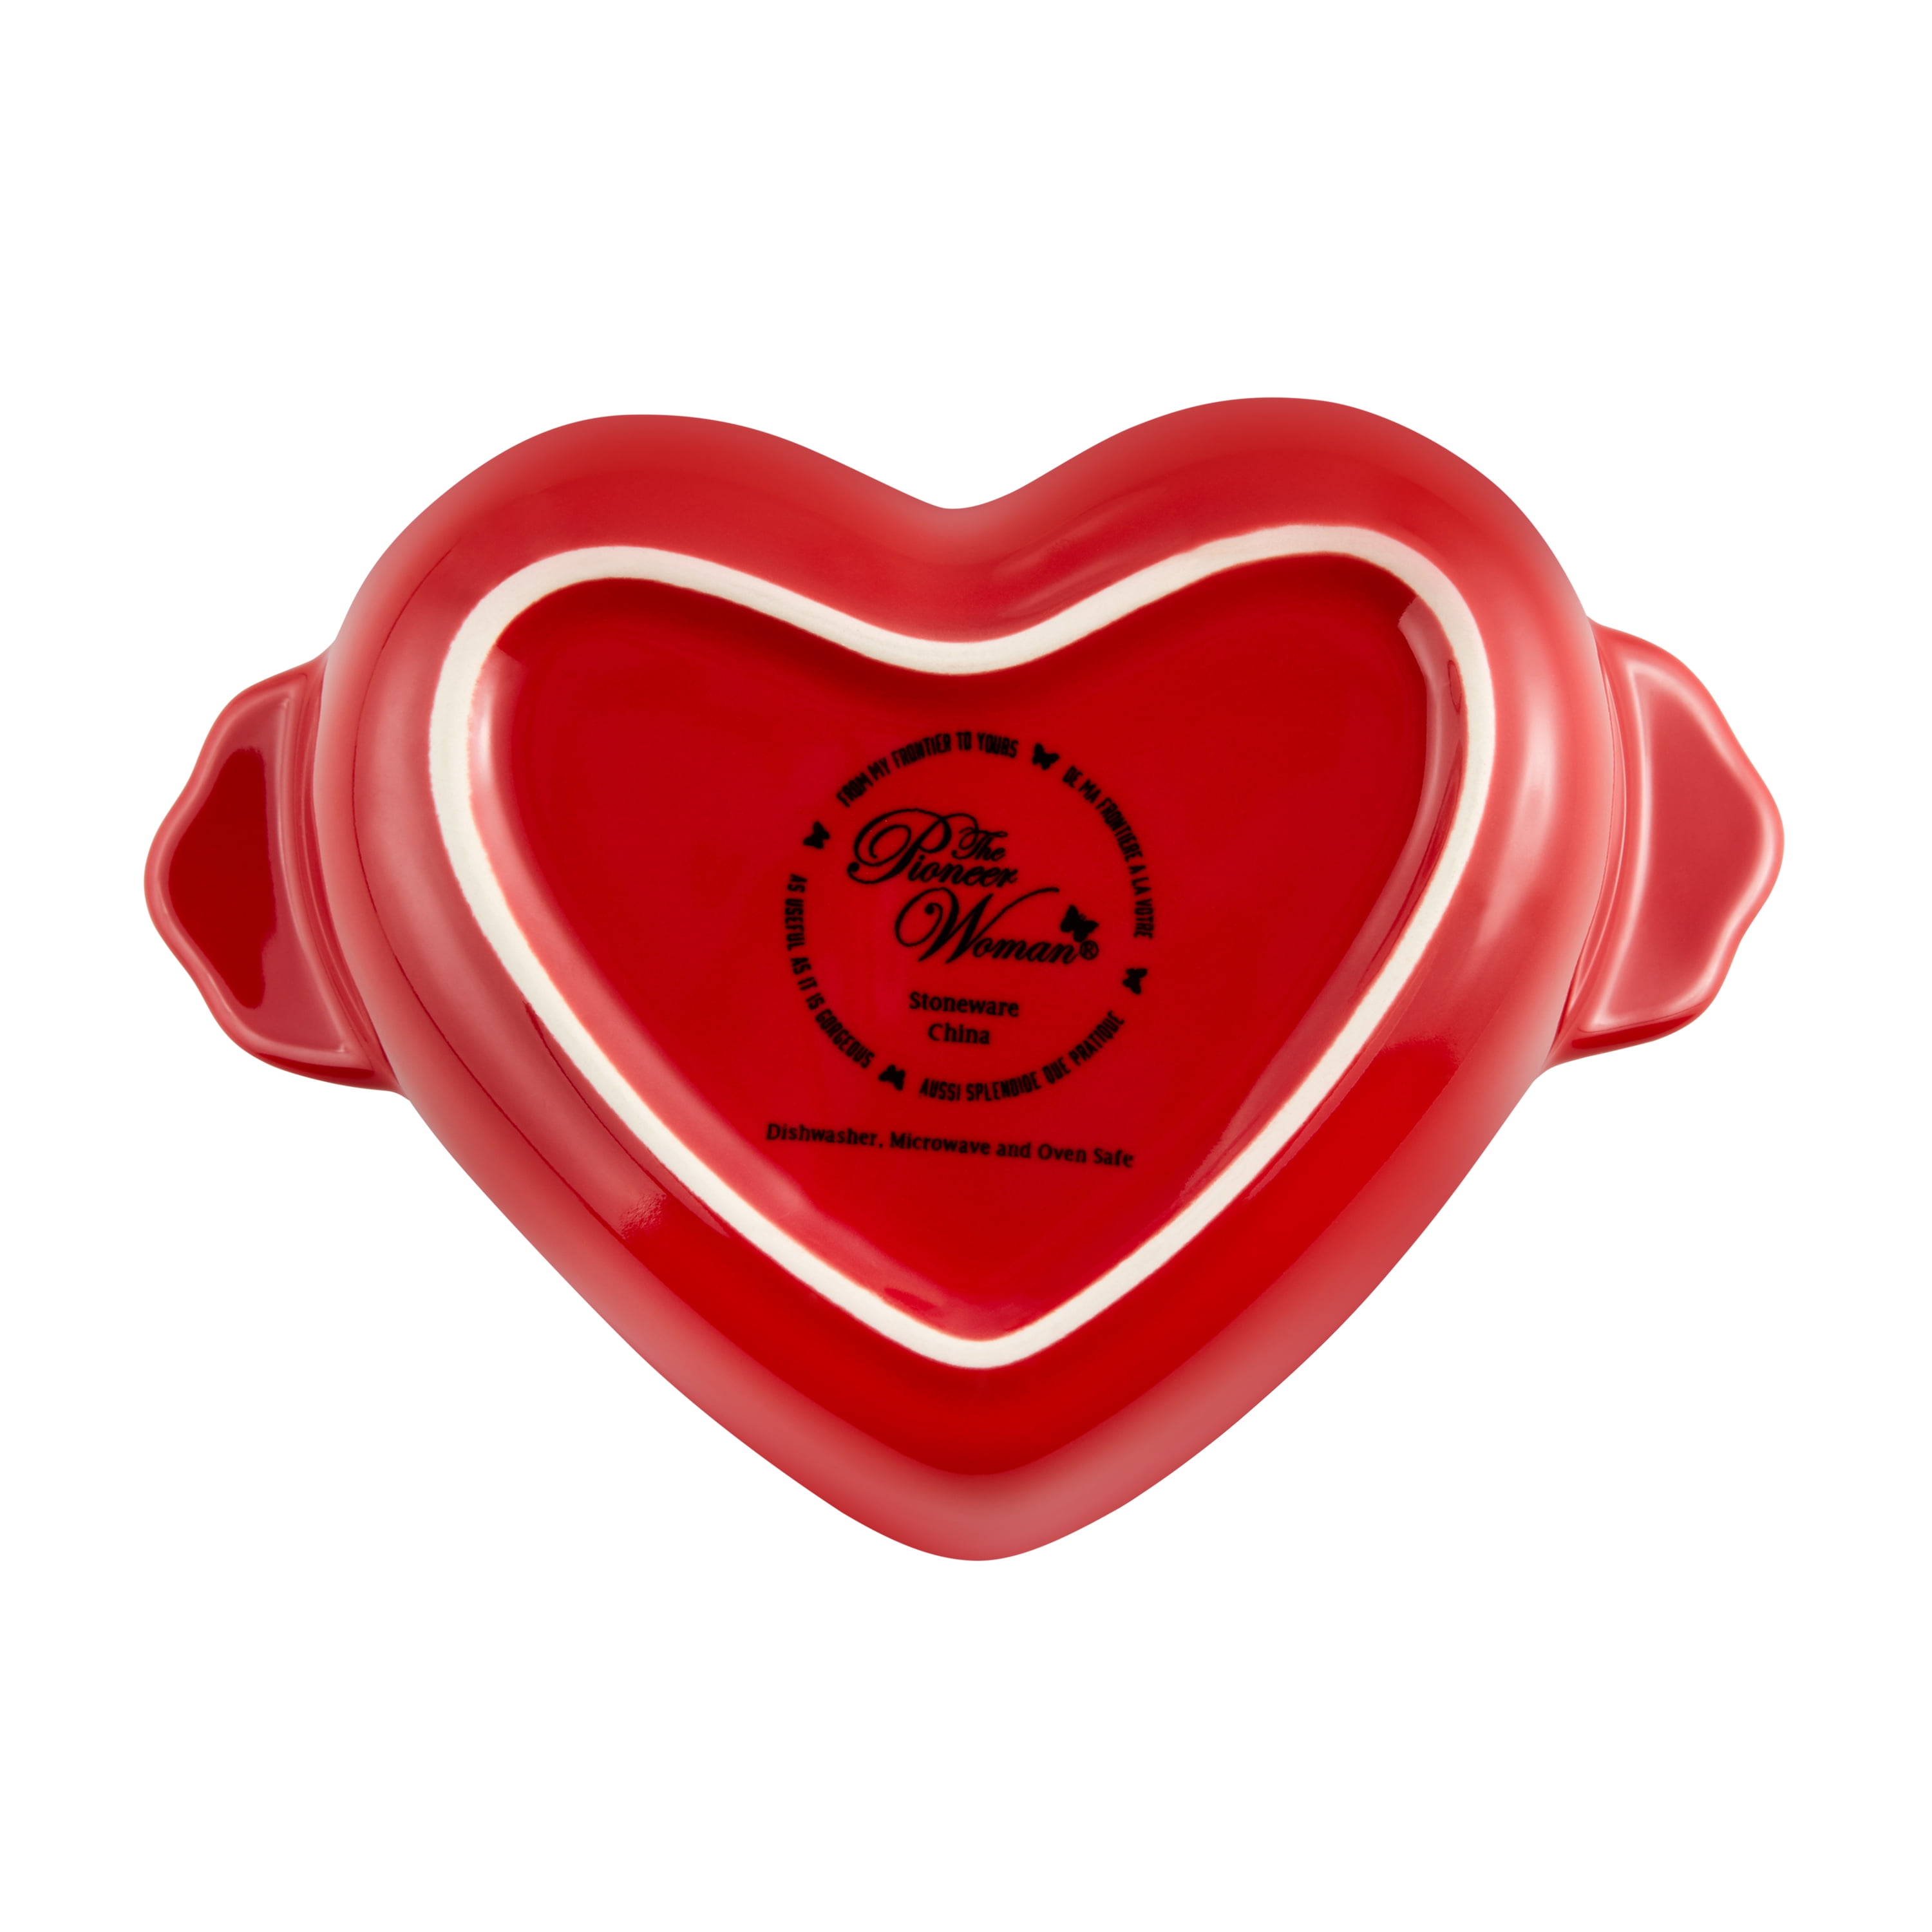 Deep Red Heart Buttons - Ceramic Heart Buttons - 7/8 - 6 Pack (ws-79)